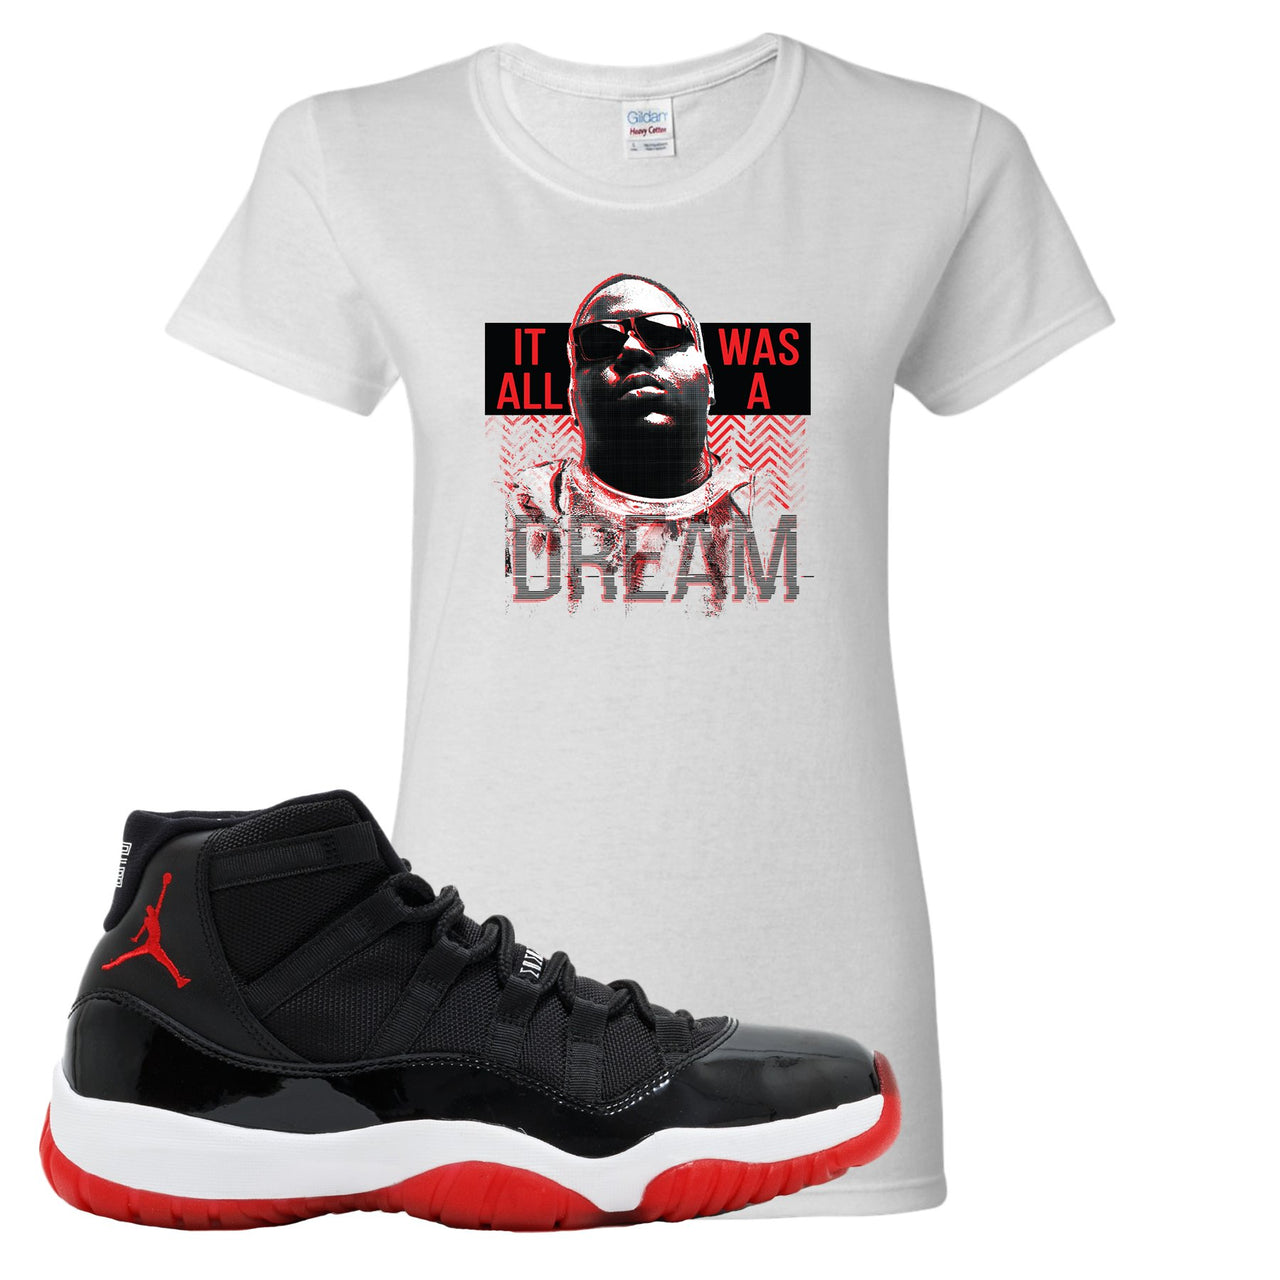 Jordan 11 Bred It Was All A Dream White Sneaker Hook Up Women's T-Shirt